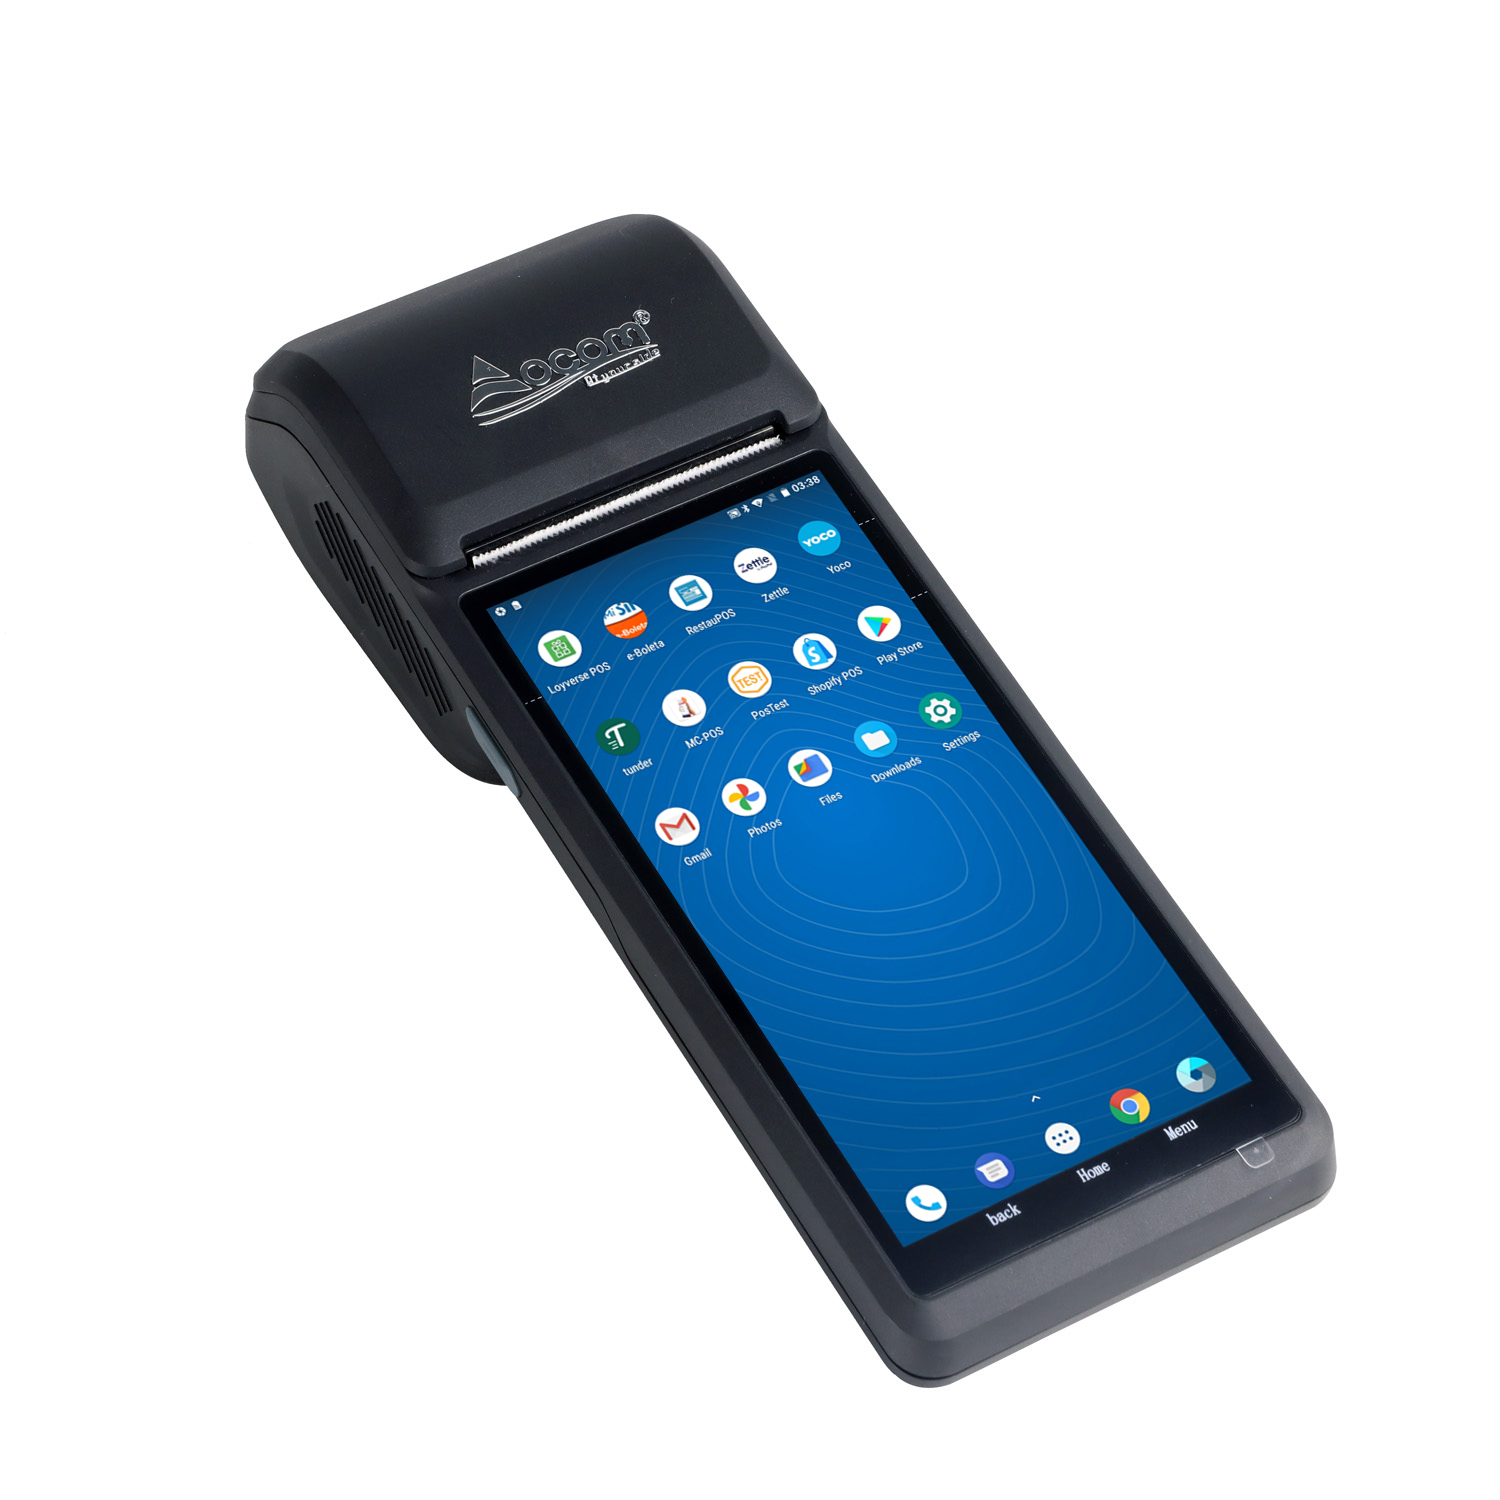 (POS-T3) طابعة ماسحة ضوئية رخيصة الثمن NFC 58 مللي متر الدفع عبر الهاتف المحمول الكل في واحد android11 ​​نقطة البيع الطرفية للبيع ماكينة نقاط البيع المحمولة